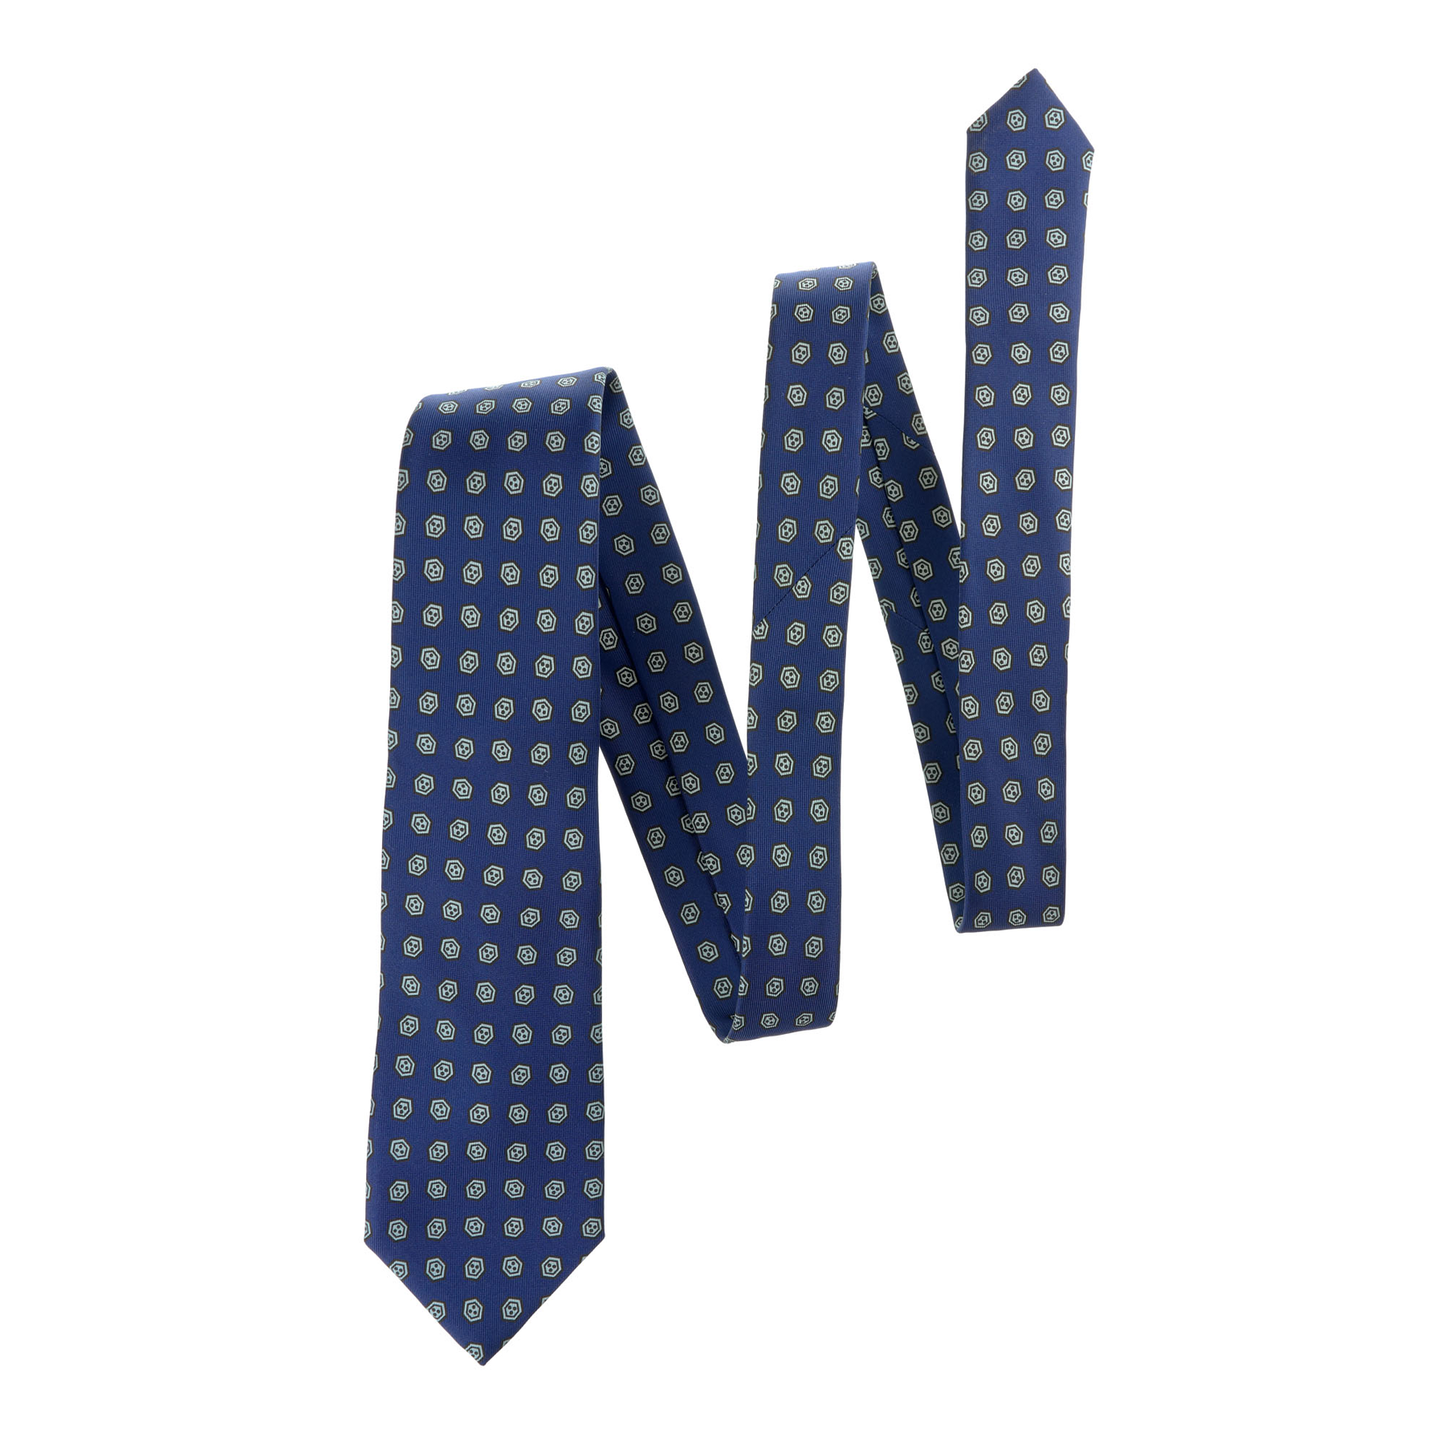 Hand-Printed Silk Tie in Navy Blue